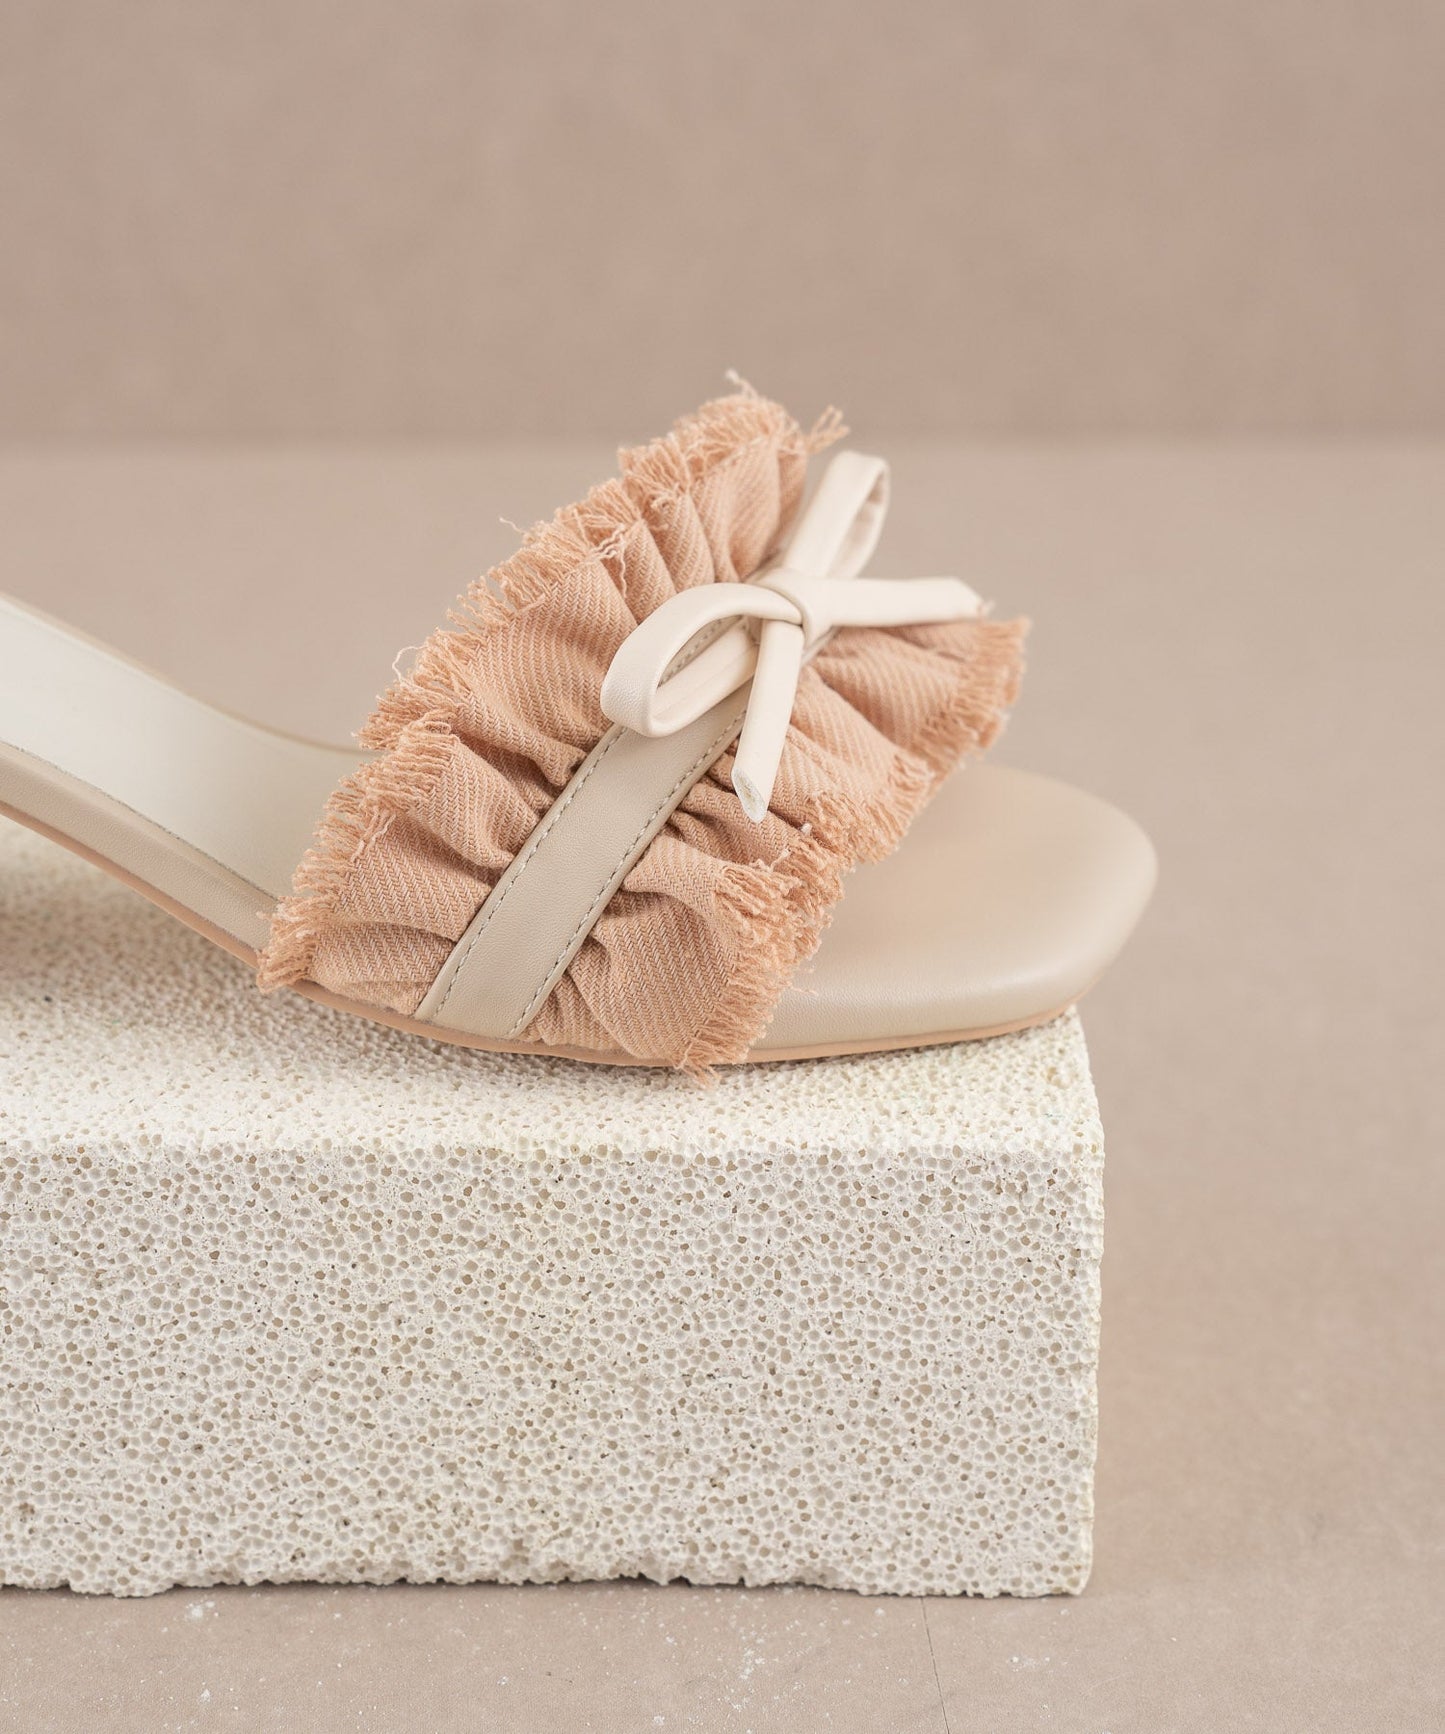 The Julissa | Apricot Romantic Low Heel Sandal